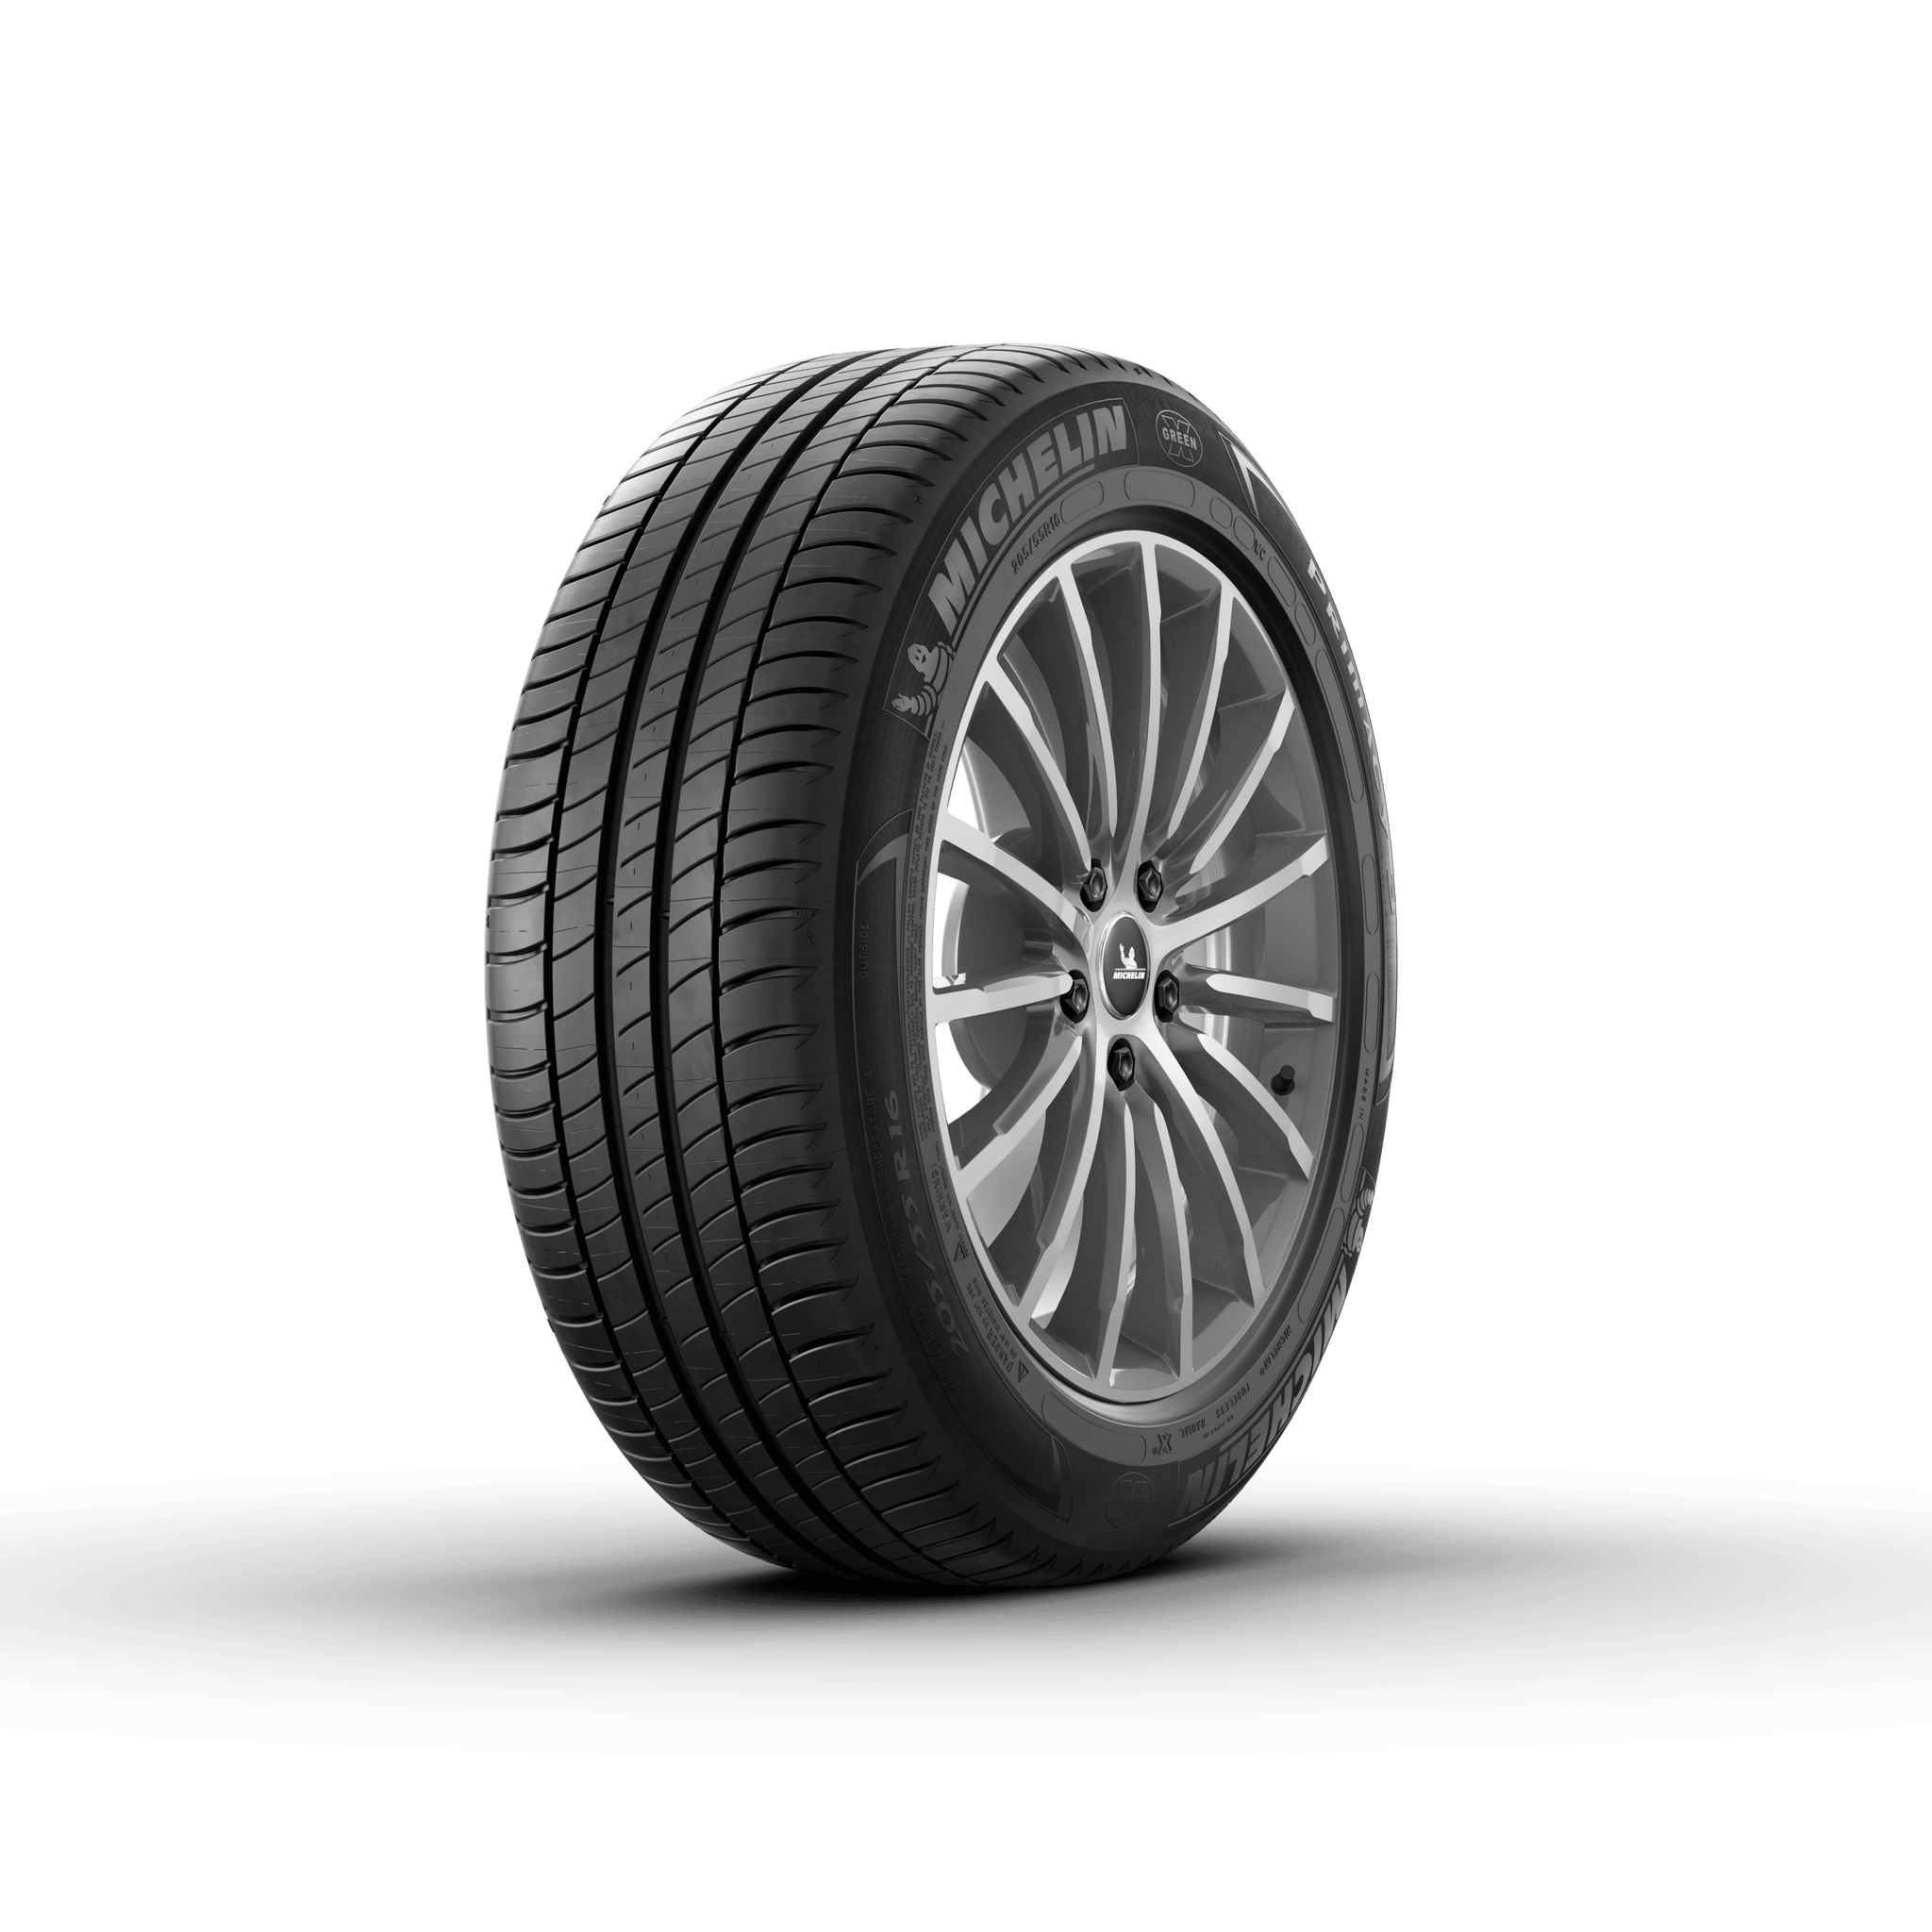 MICHELIN PRIMACY 3 245/50R18 (27.7X9.7R 18) Tires